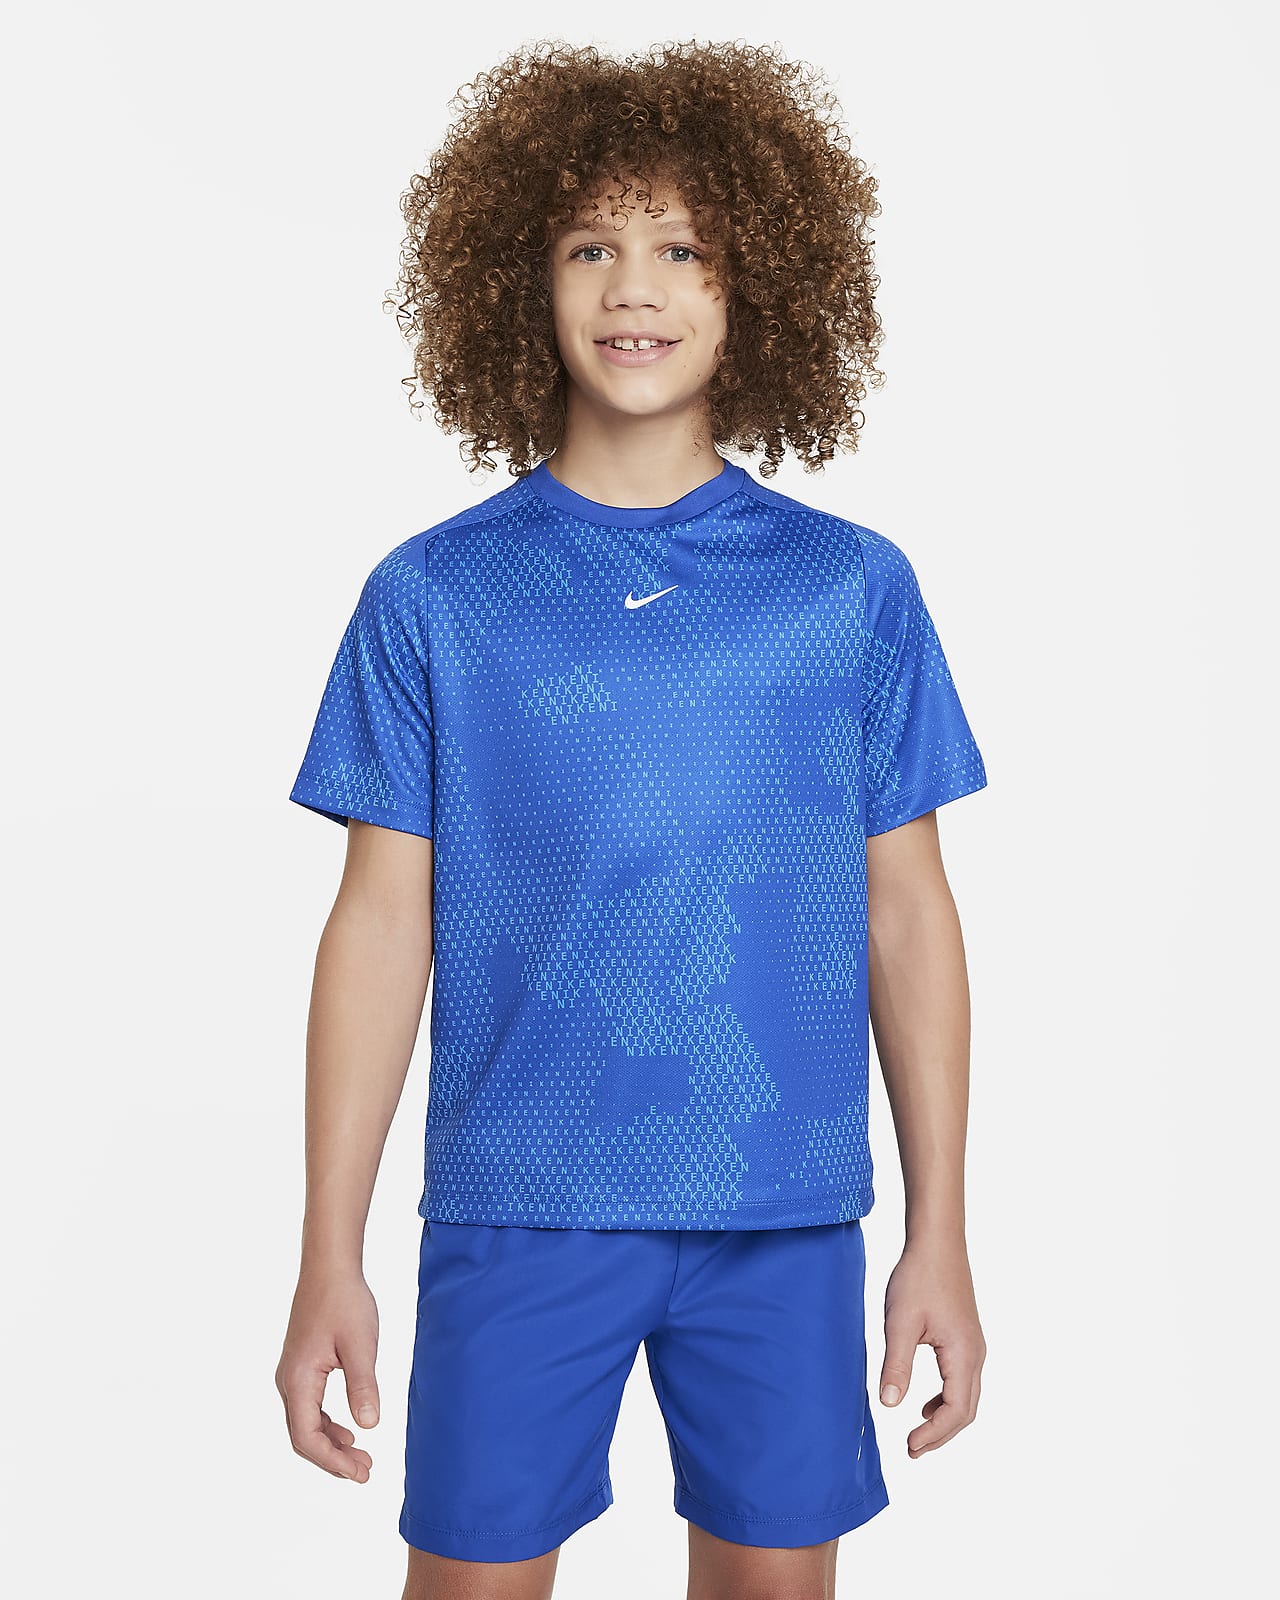 Nike Multi Dri-FIT Kısa Kollu Genç Çocuk (Erkek) Üstü